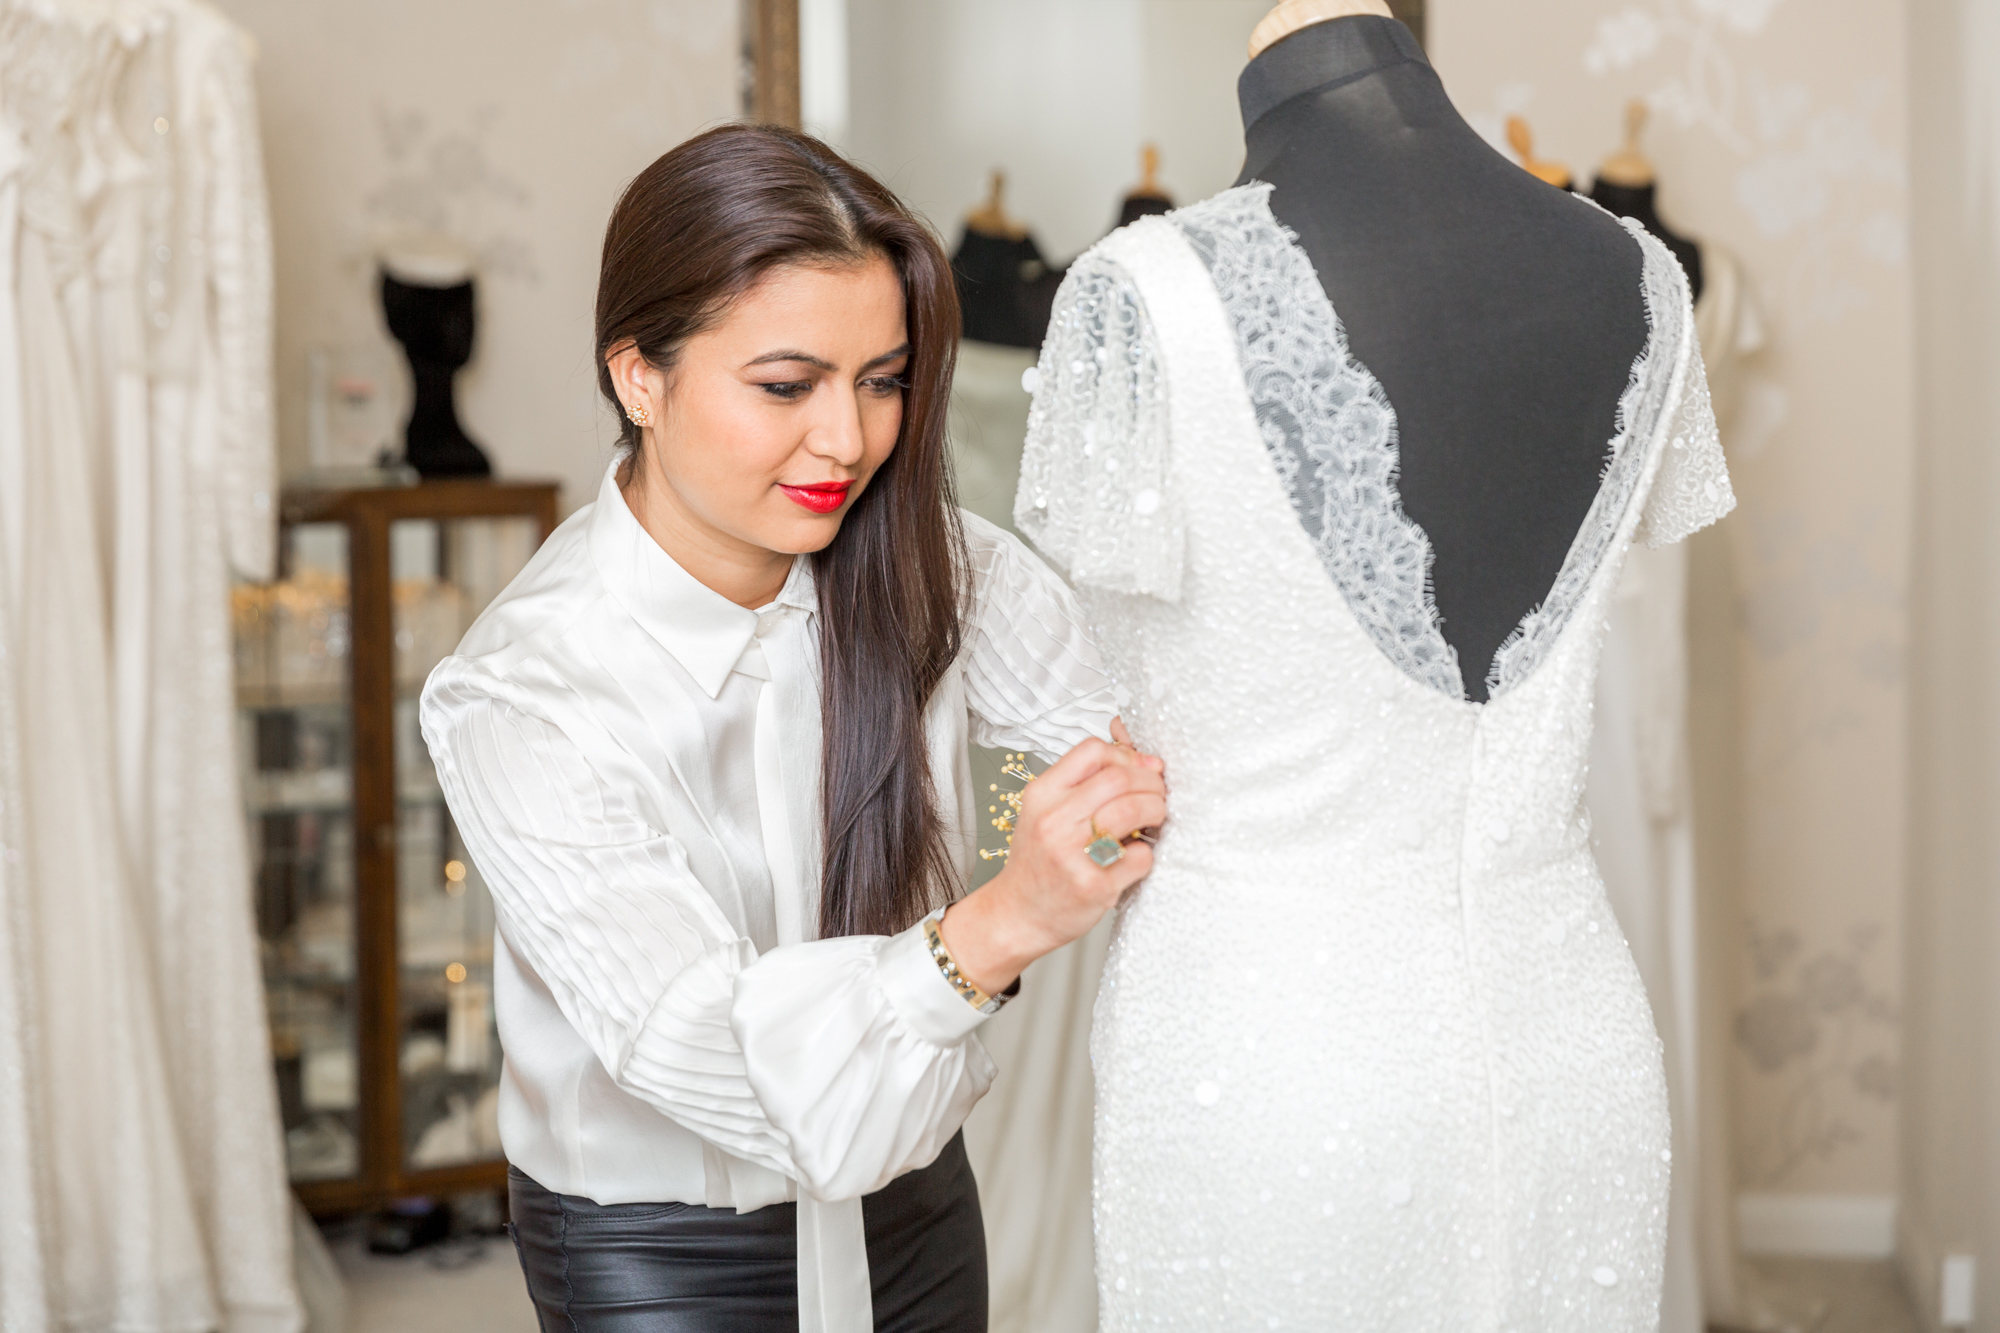 sanyukta shrestha ethical wedding dress designer - Ethical Wedding Dress Appointments - What To Expect, What to Wear + Who To Take With You, by Sanyukta Shrestha